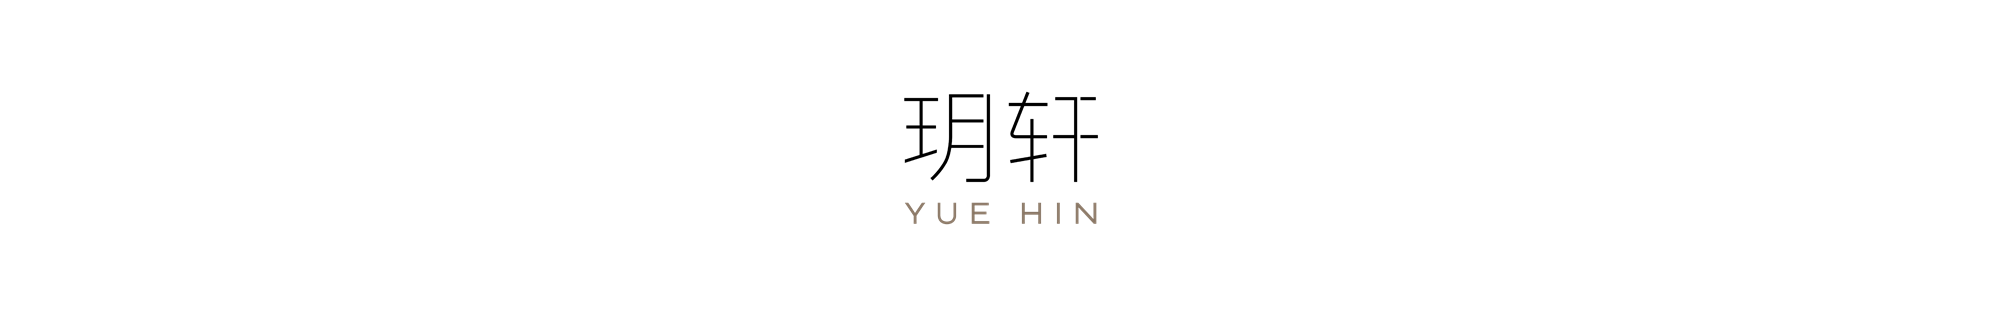 Yue Hin logo